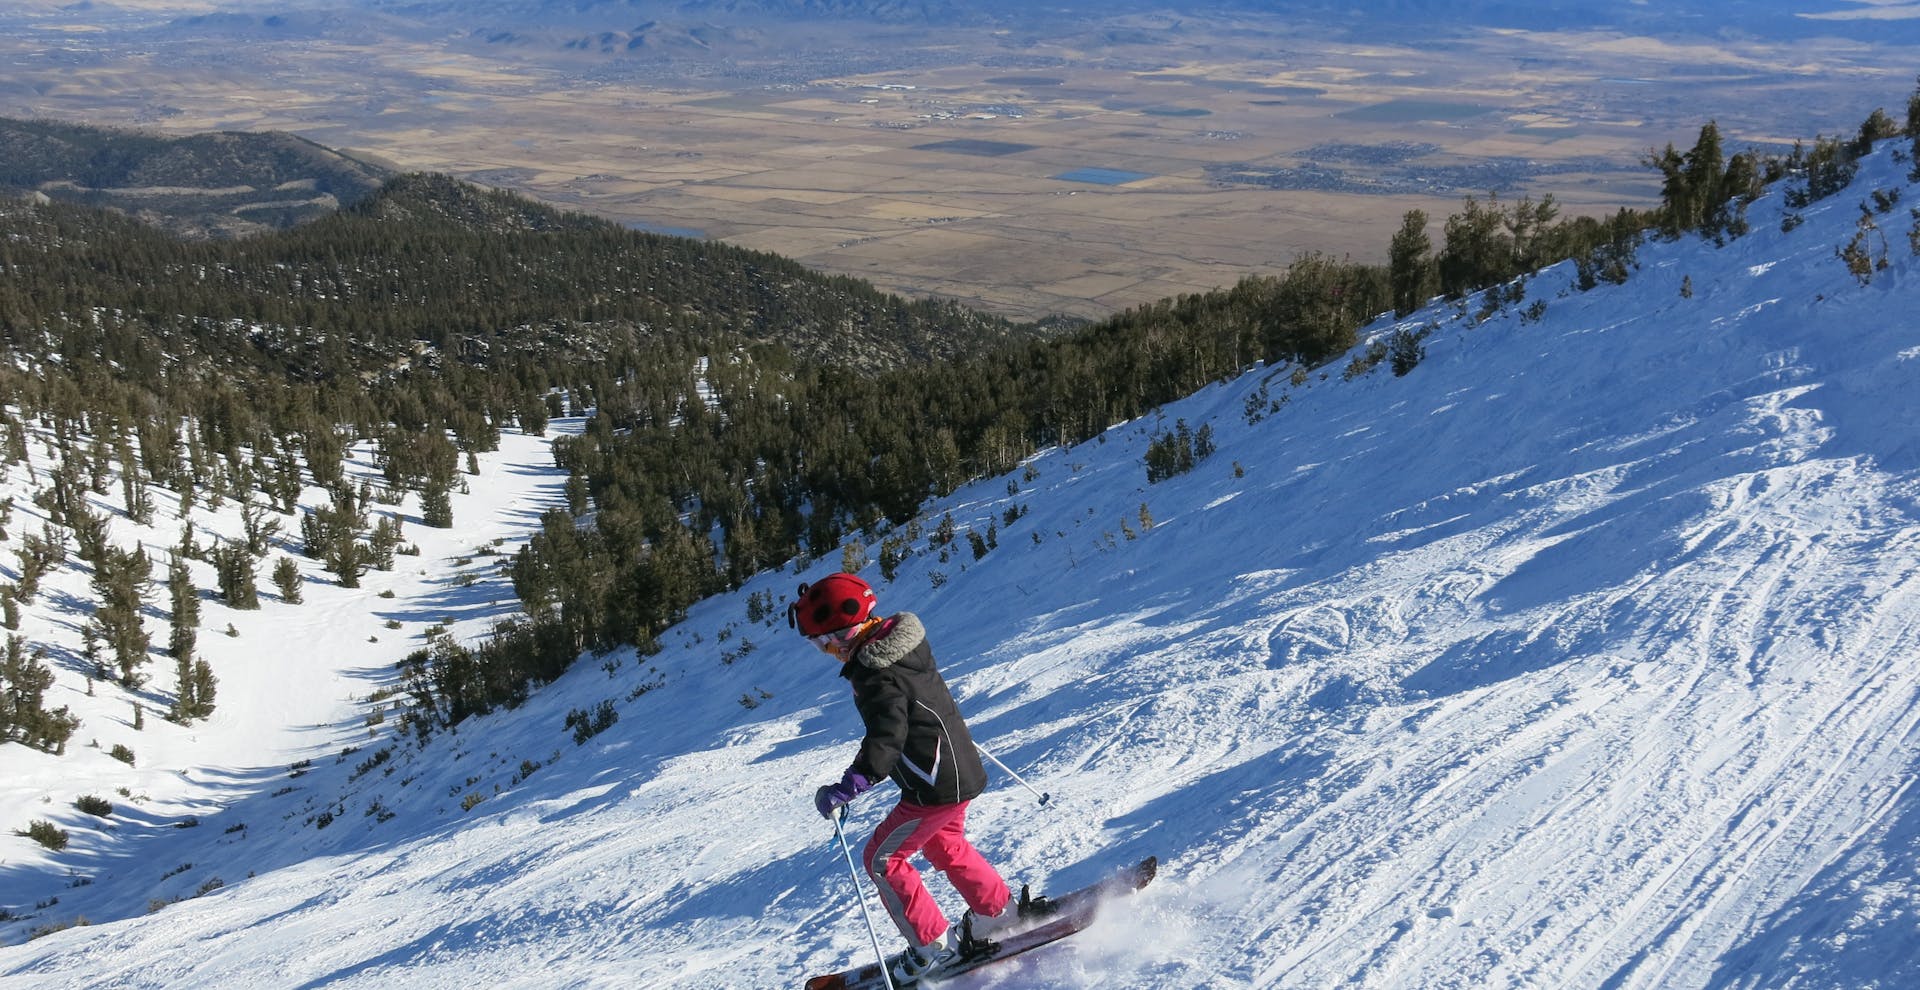 A kid skiing down a slope at Heavenly Ski Resort